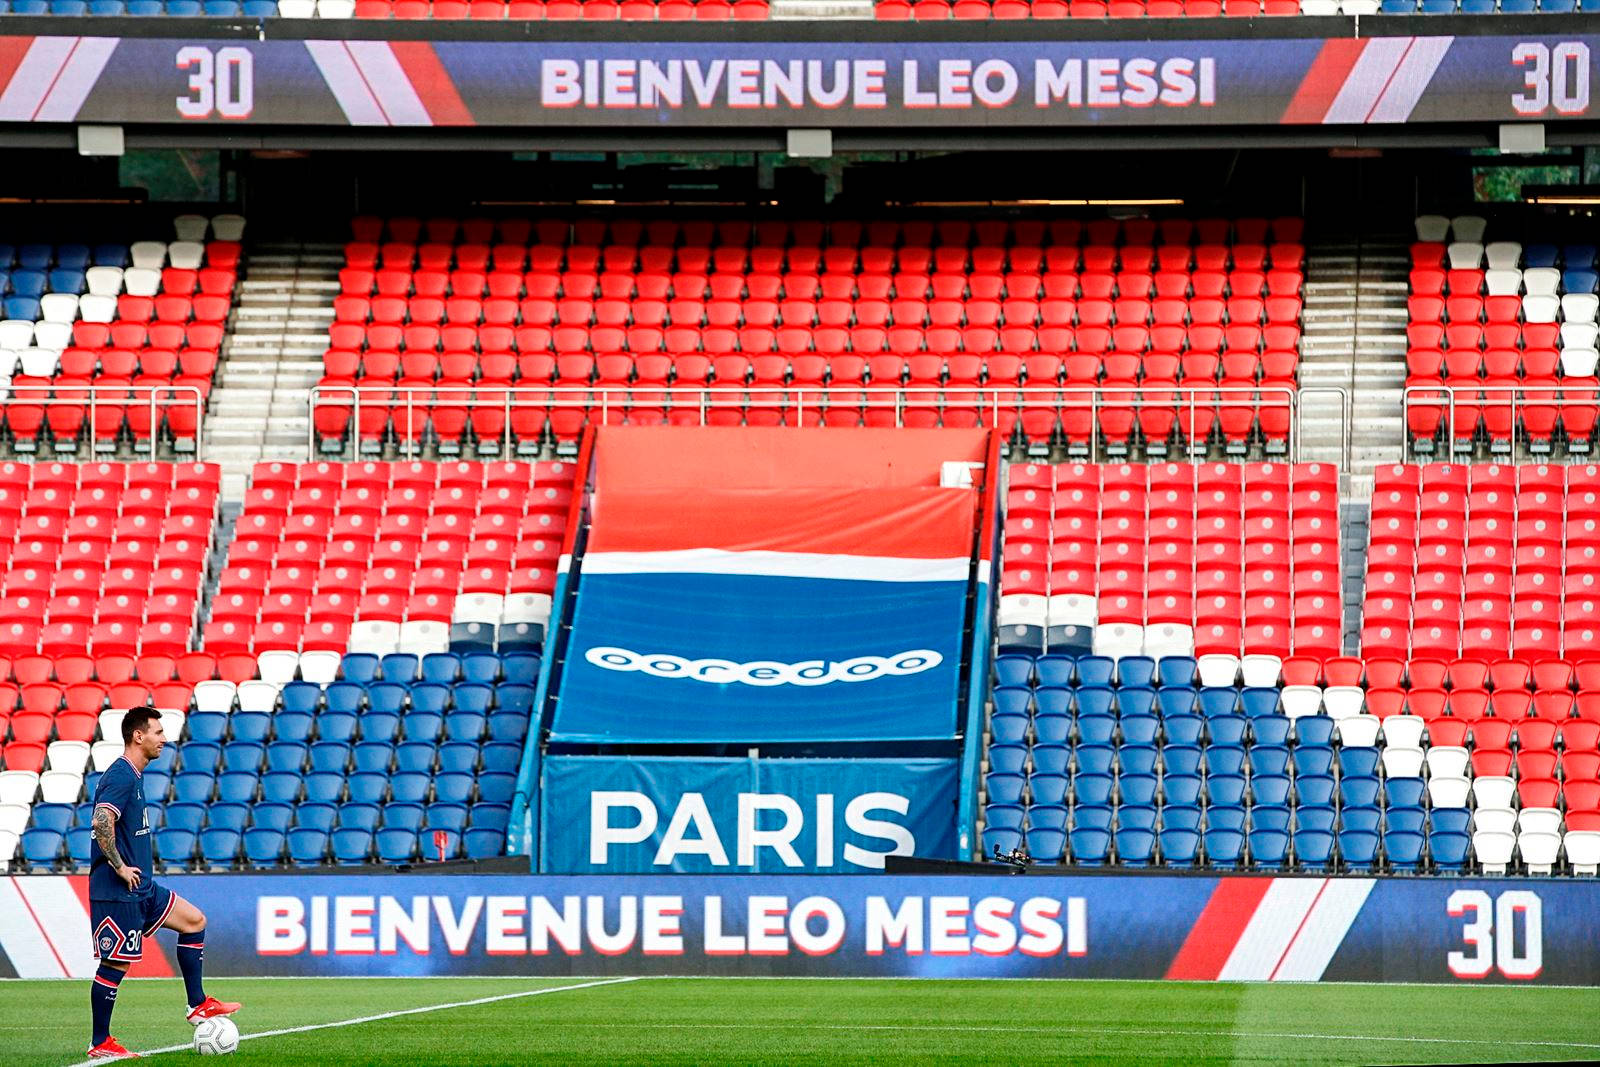 Messi Psg Stadium Seats Background